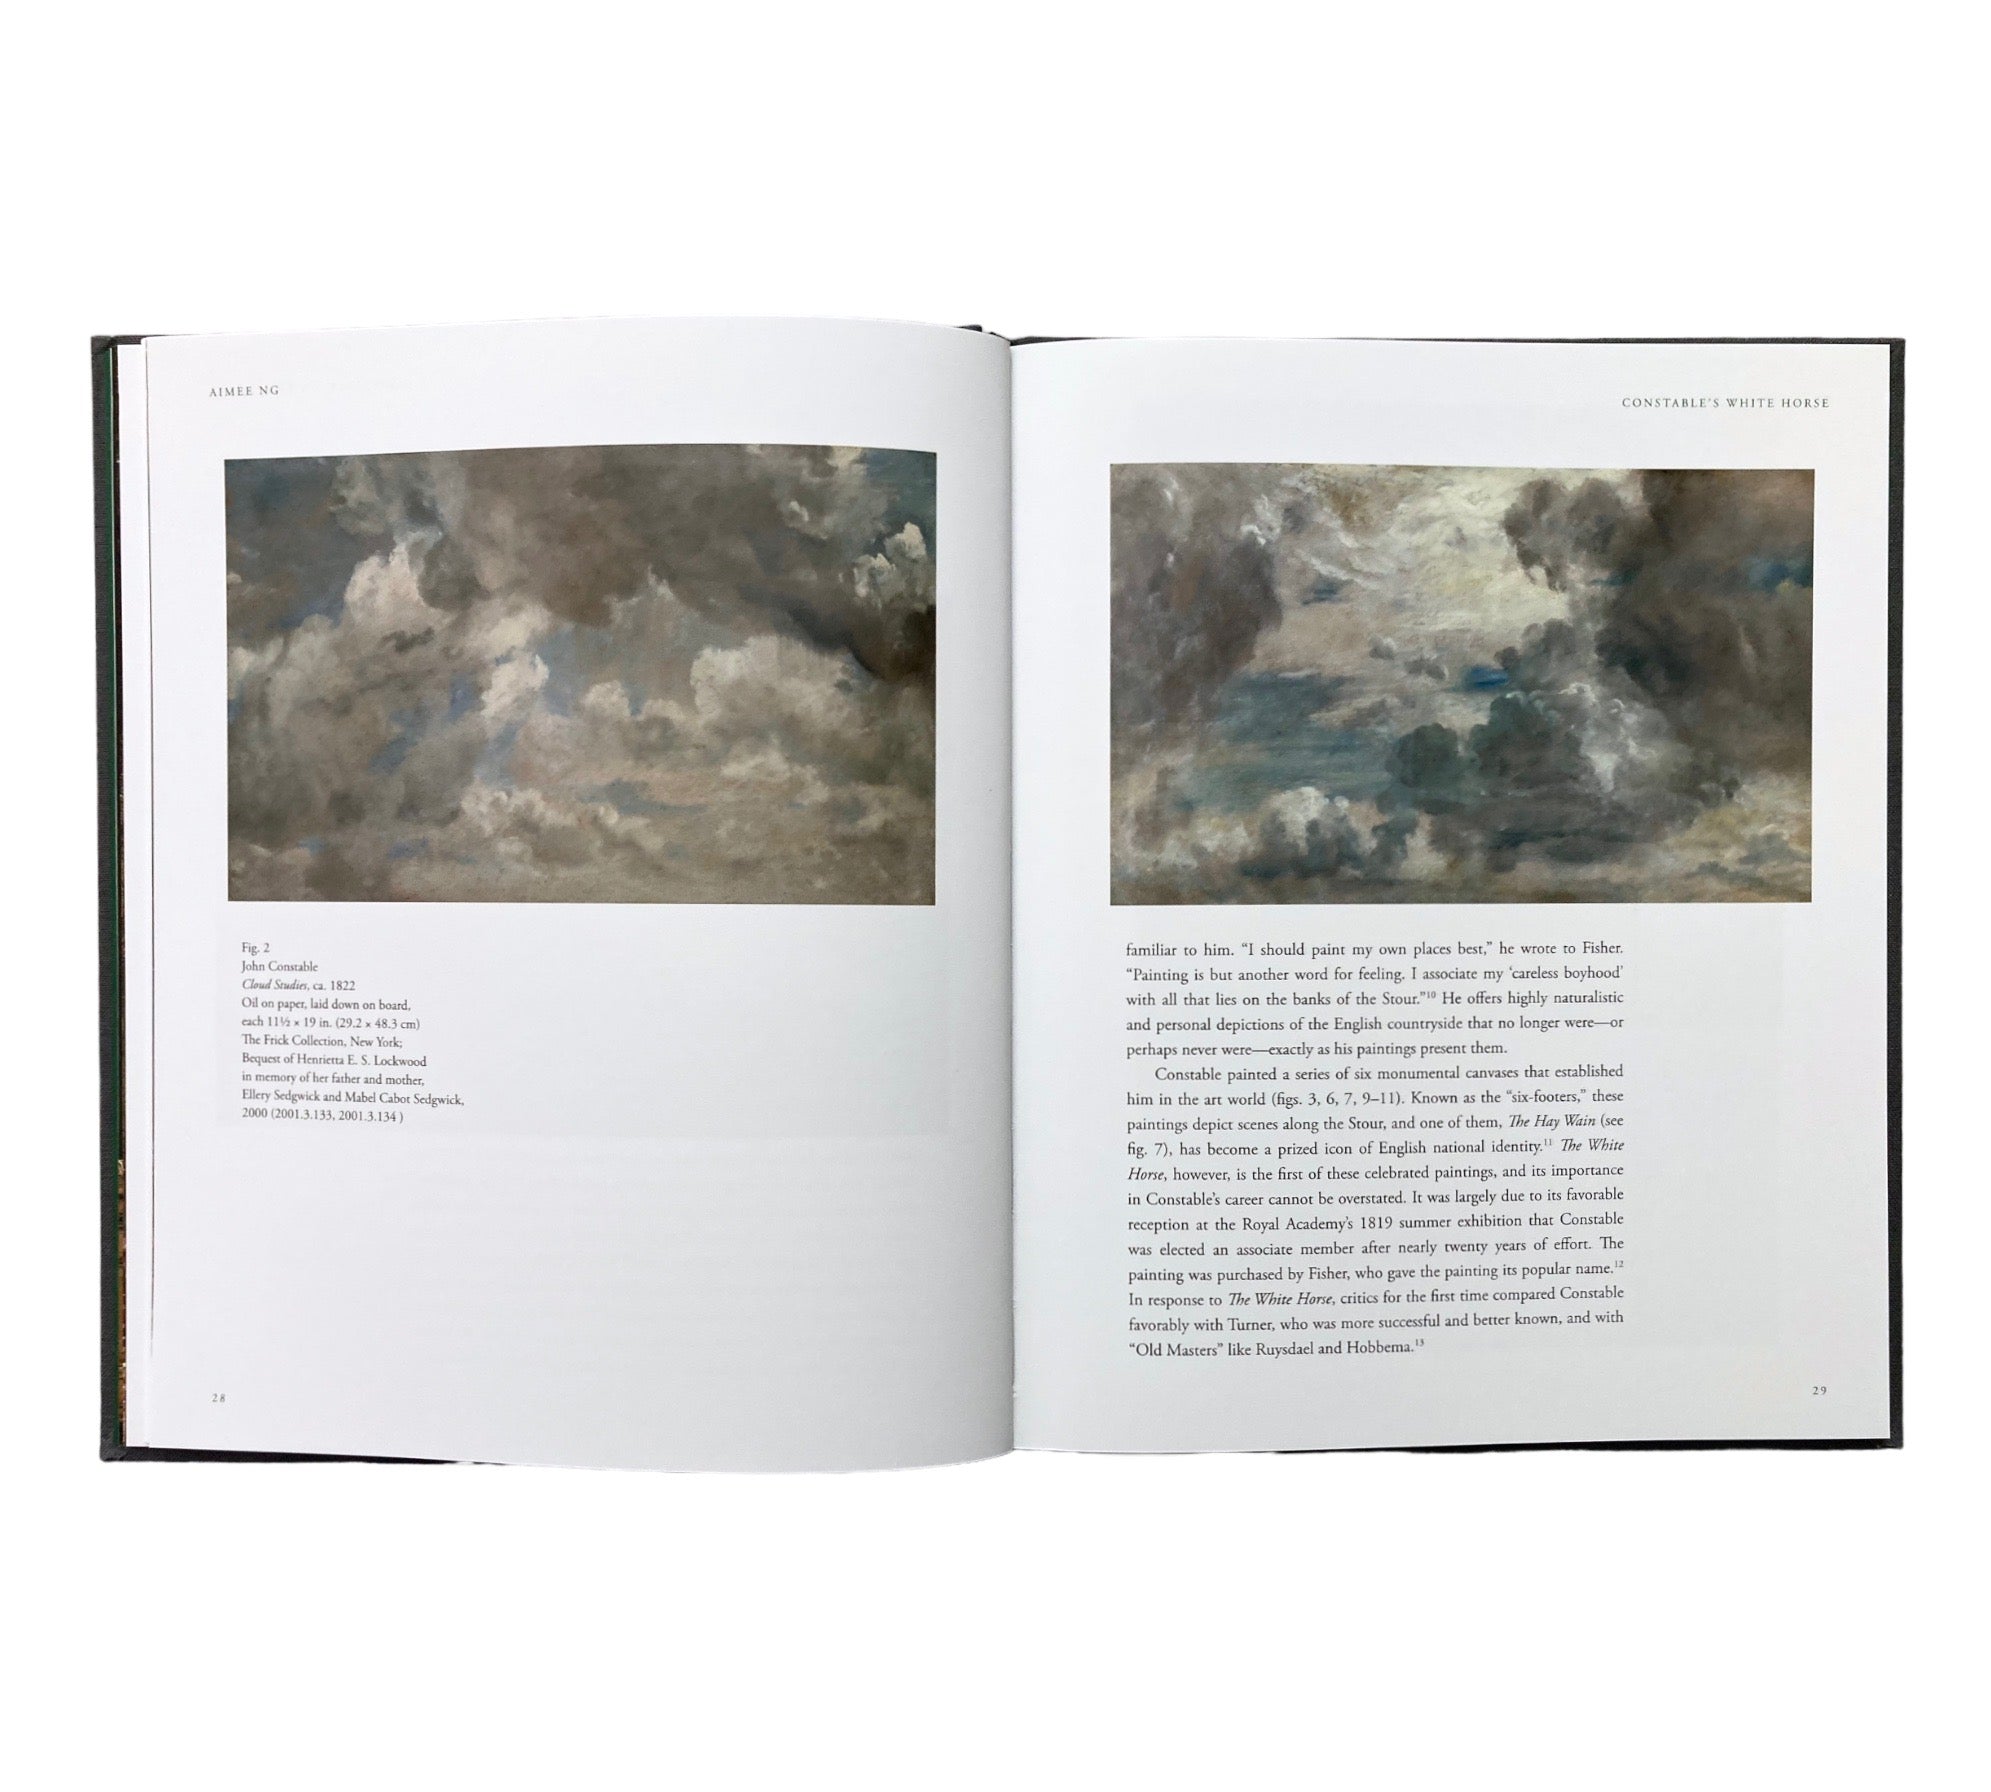 Constable's White Horse: William Kentridge & Amiee Ng